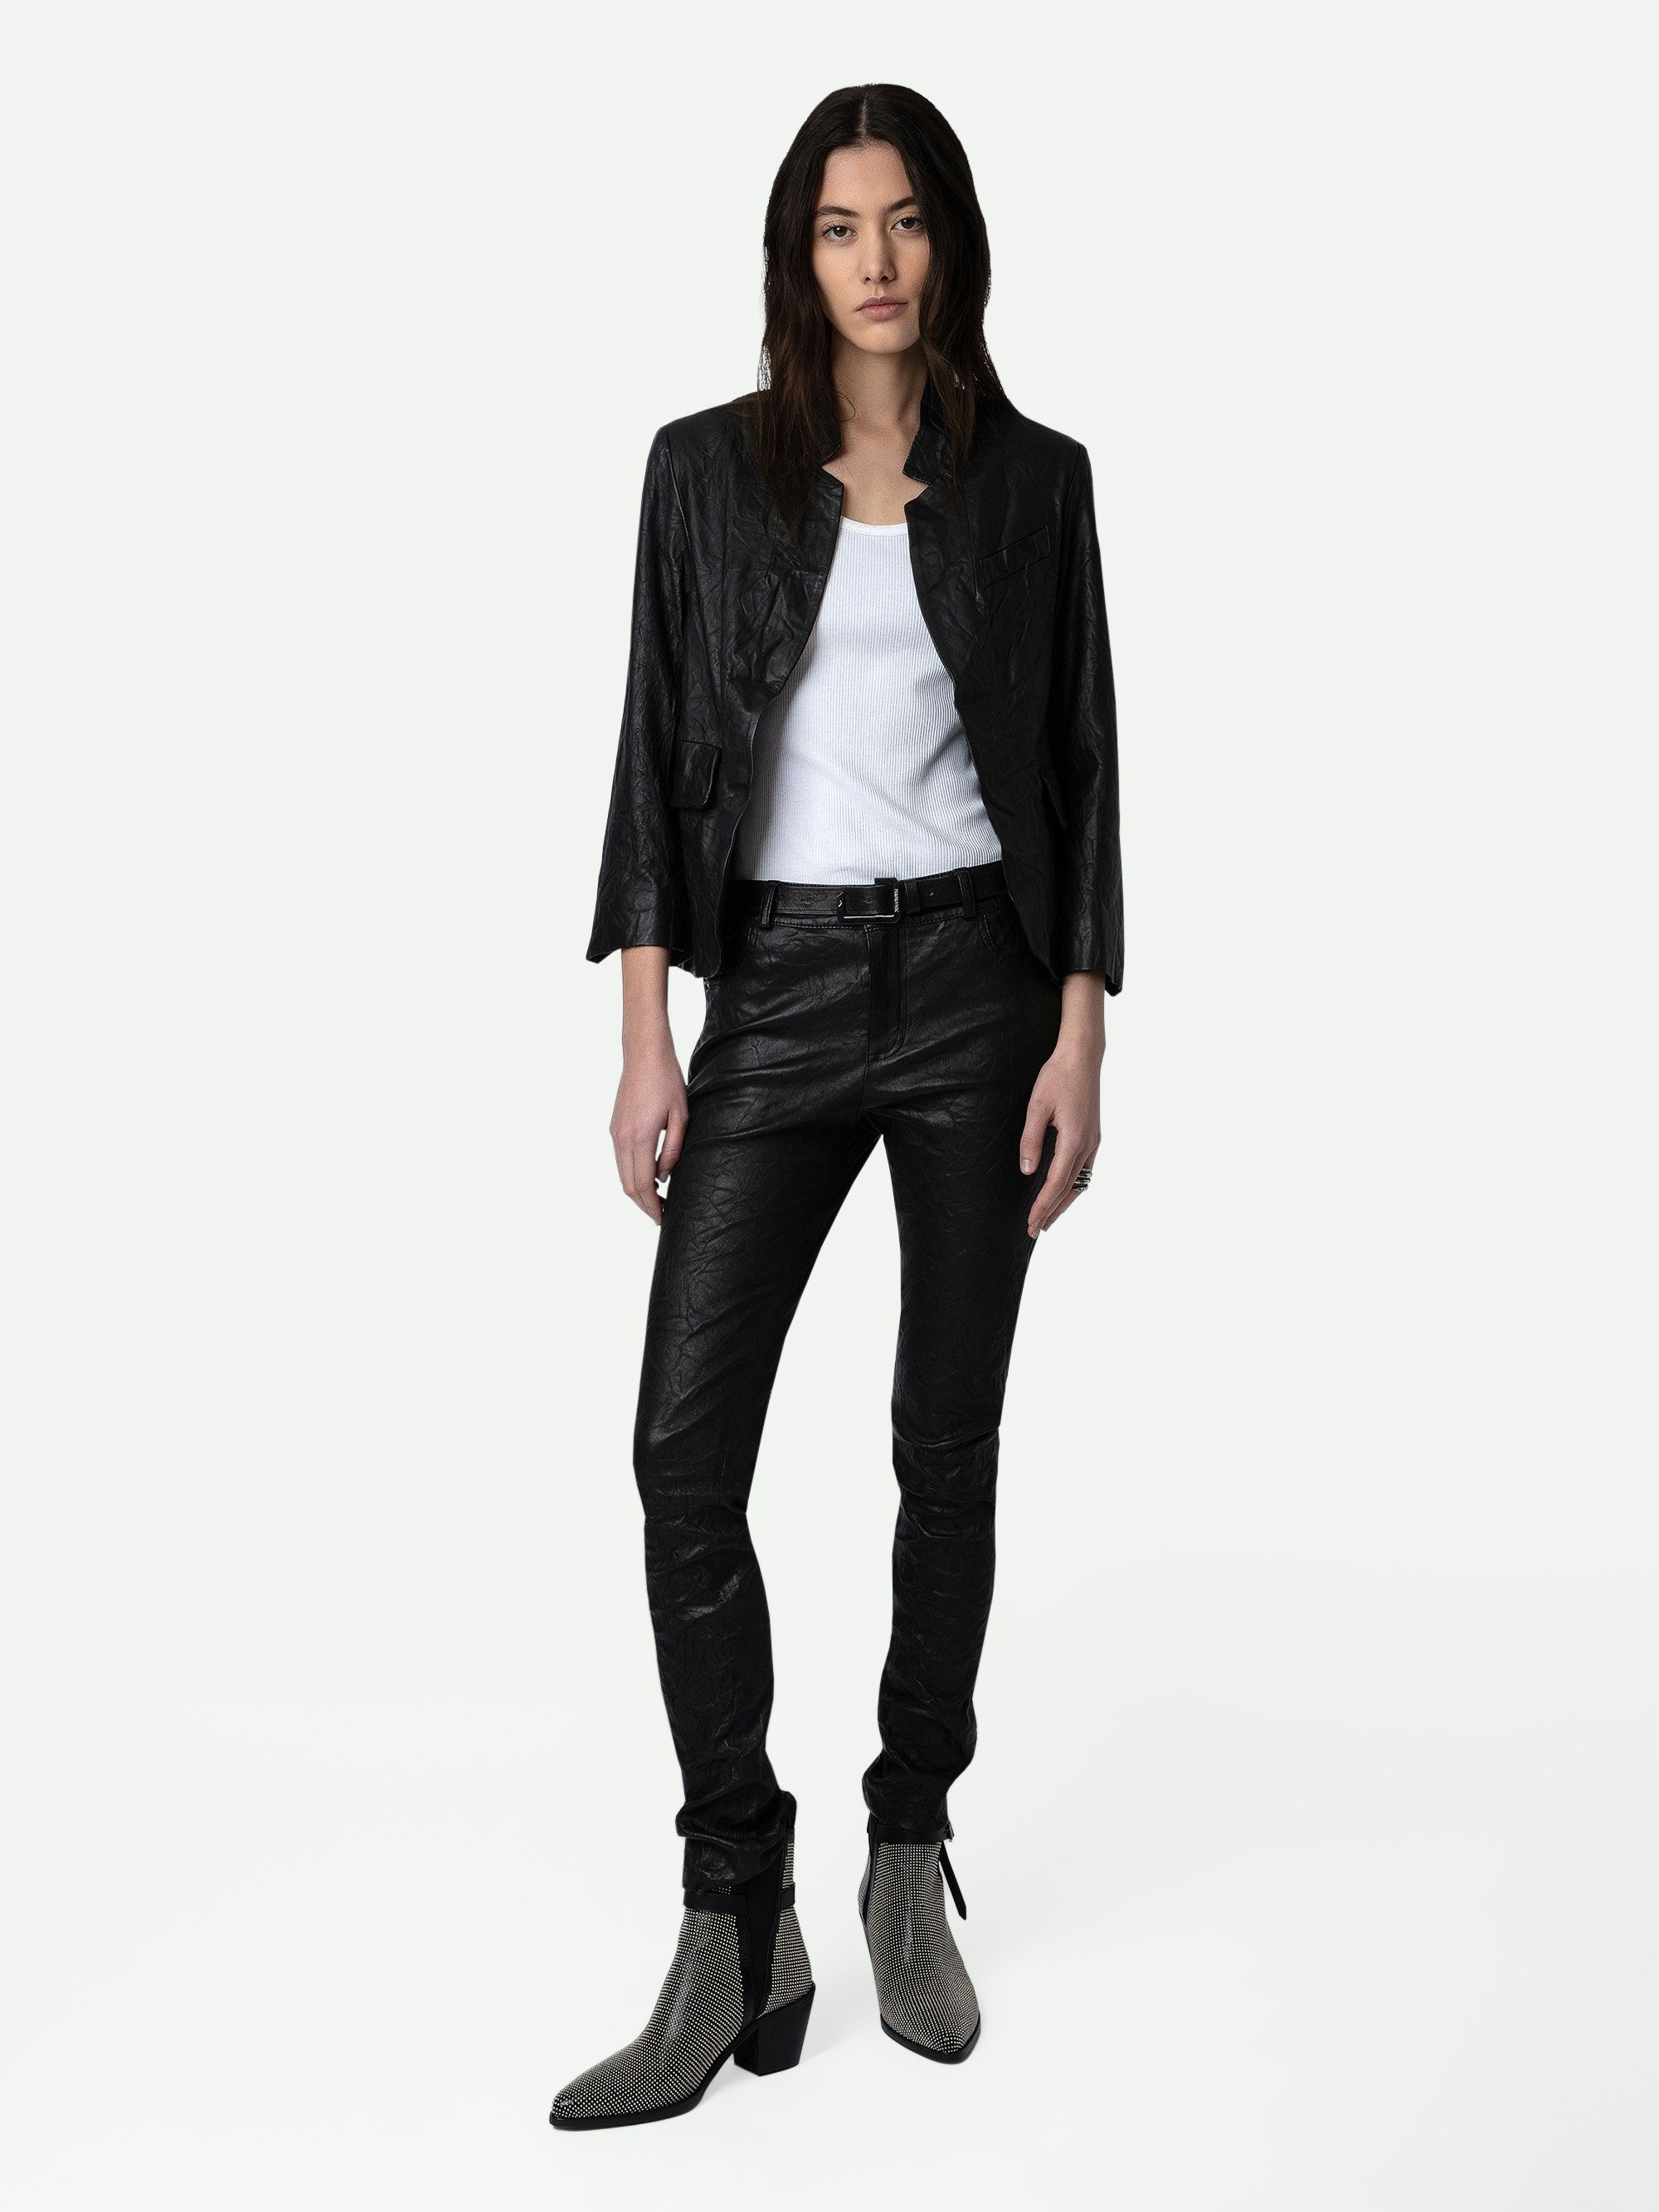 Verys Crinkled Leather Blazer - Women’s black leather jacket.